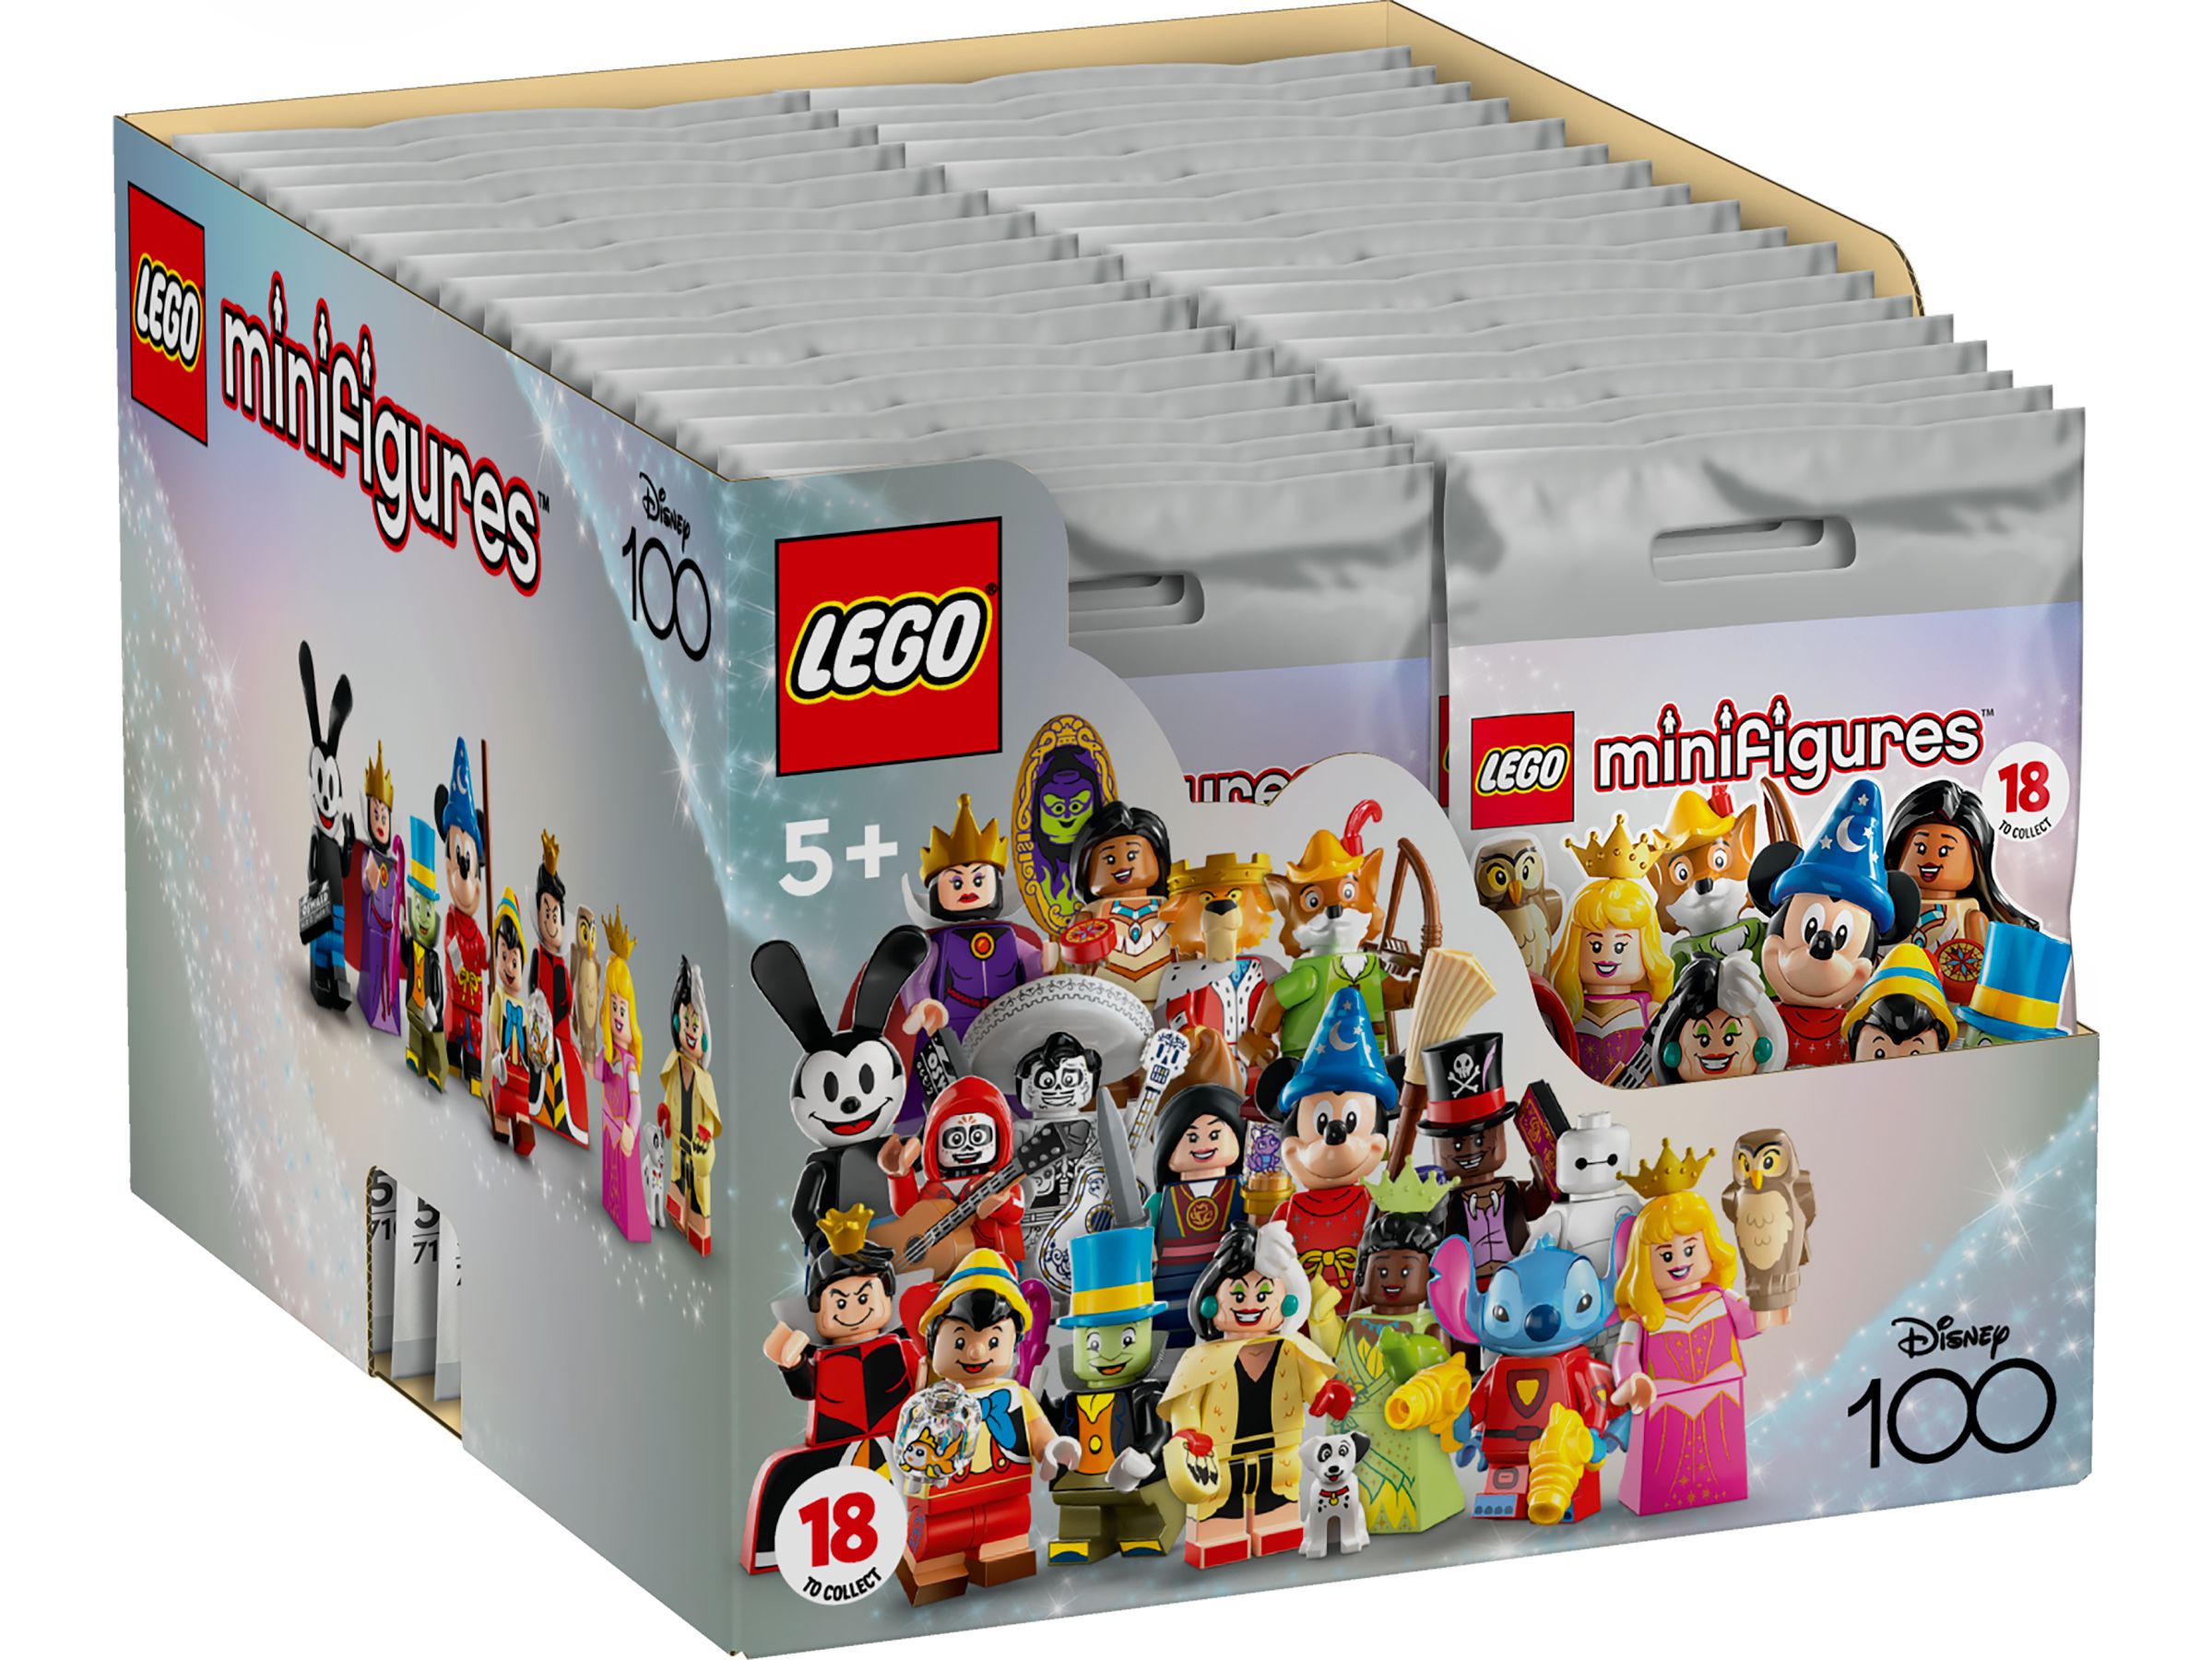 LEGO Collectable Minifigures 71038 Minifiguren Disney 100 LEGO_71038_display1_v110.jpg